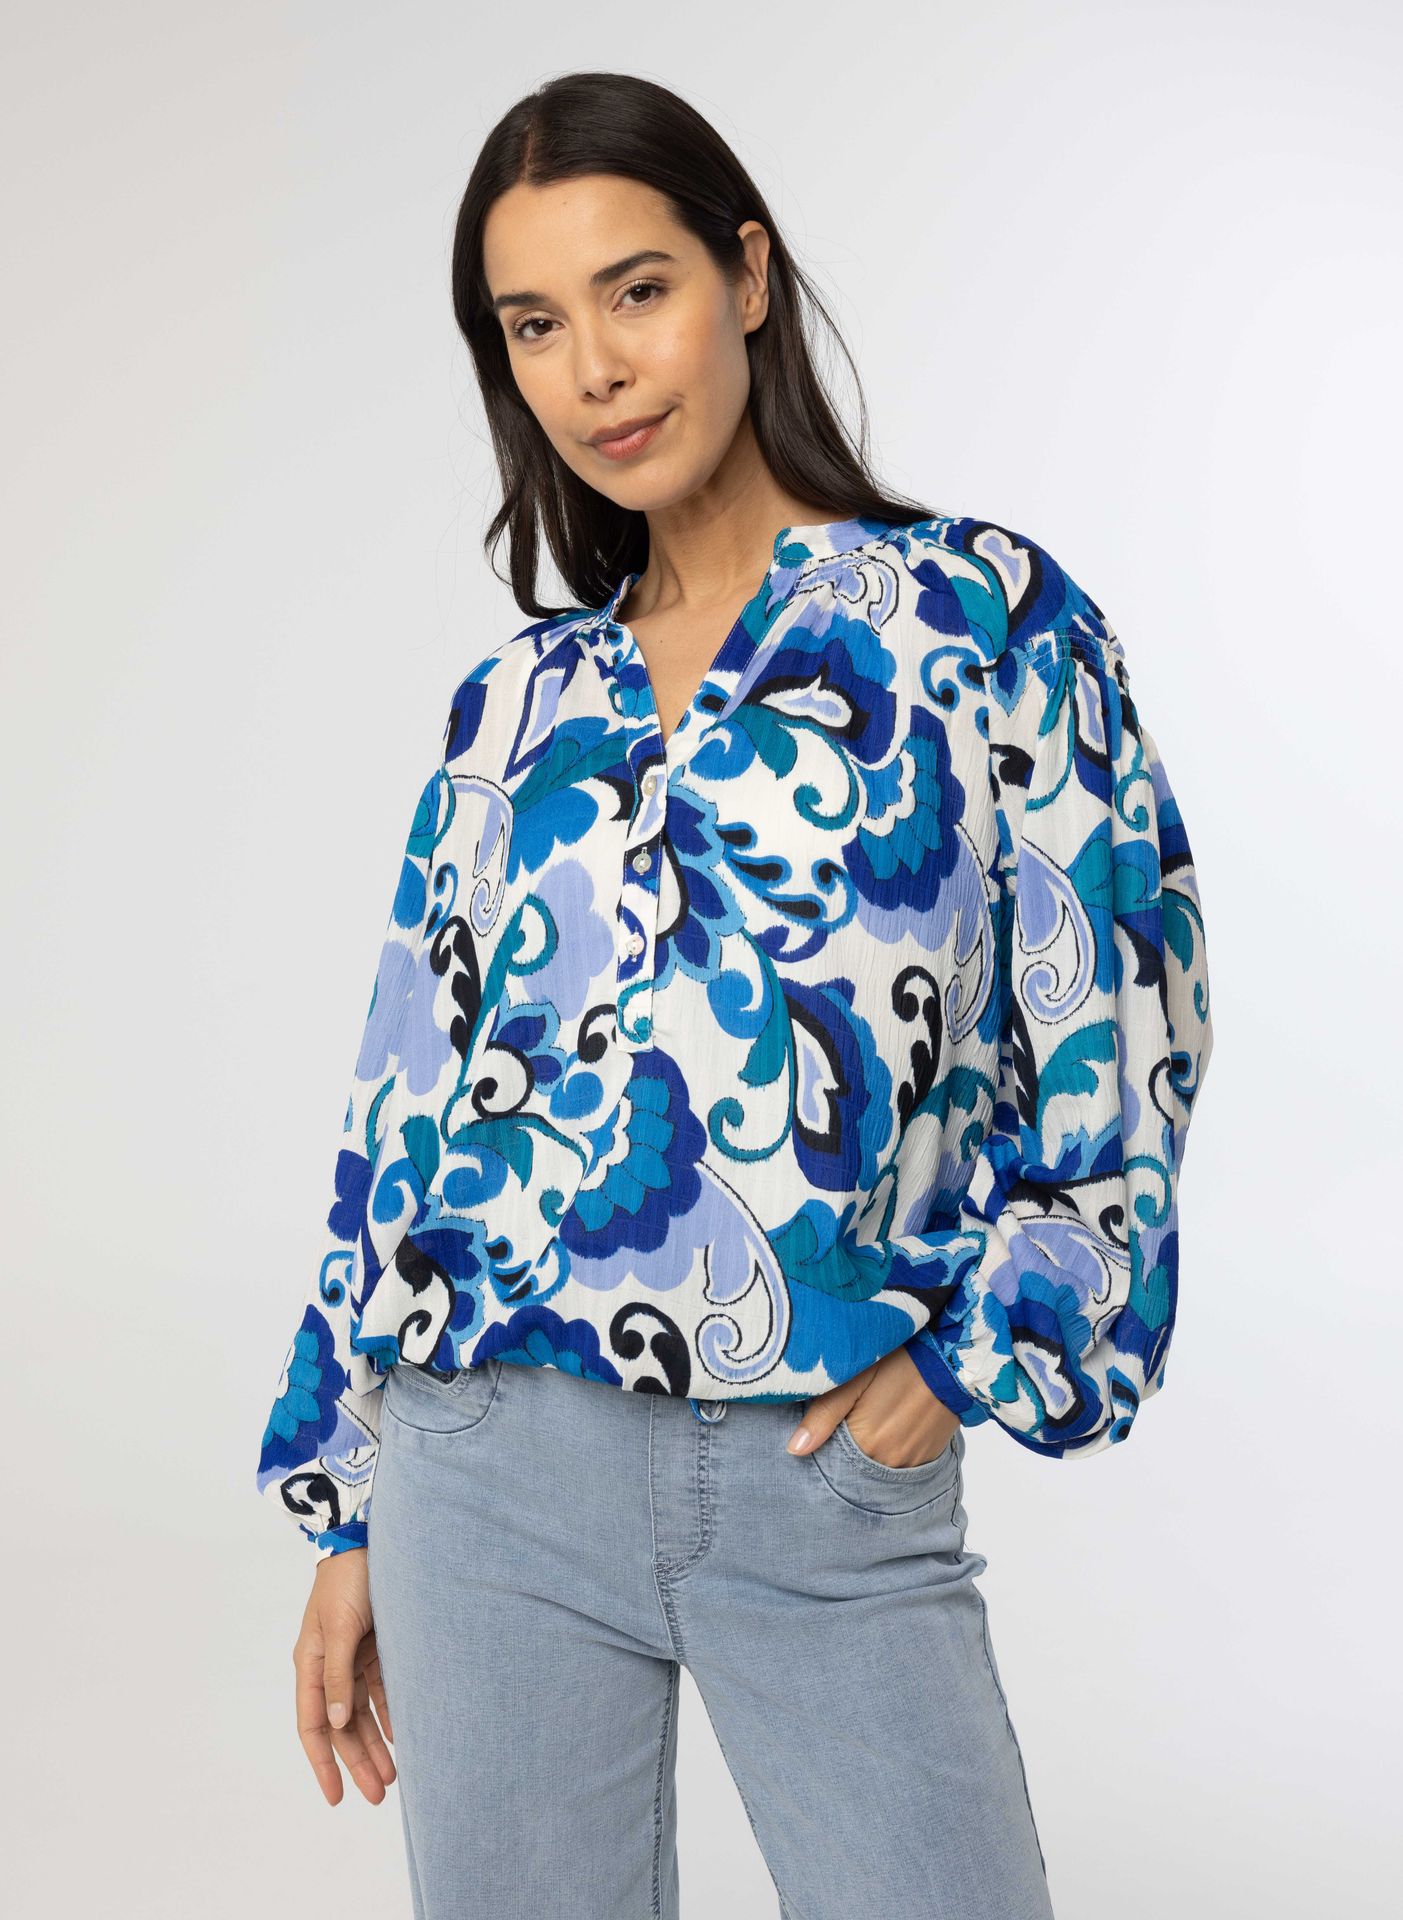 Norah Blauwe blouse met pofmouwen blue multicolor 213945-420